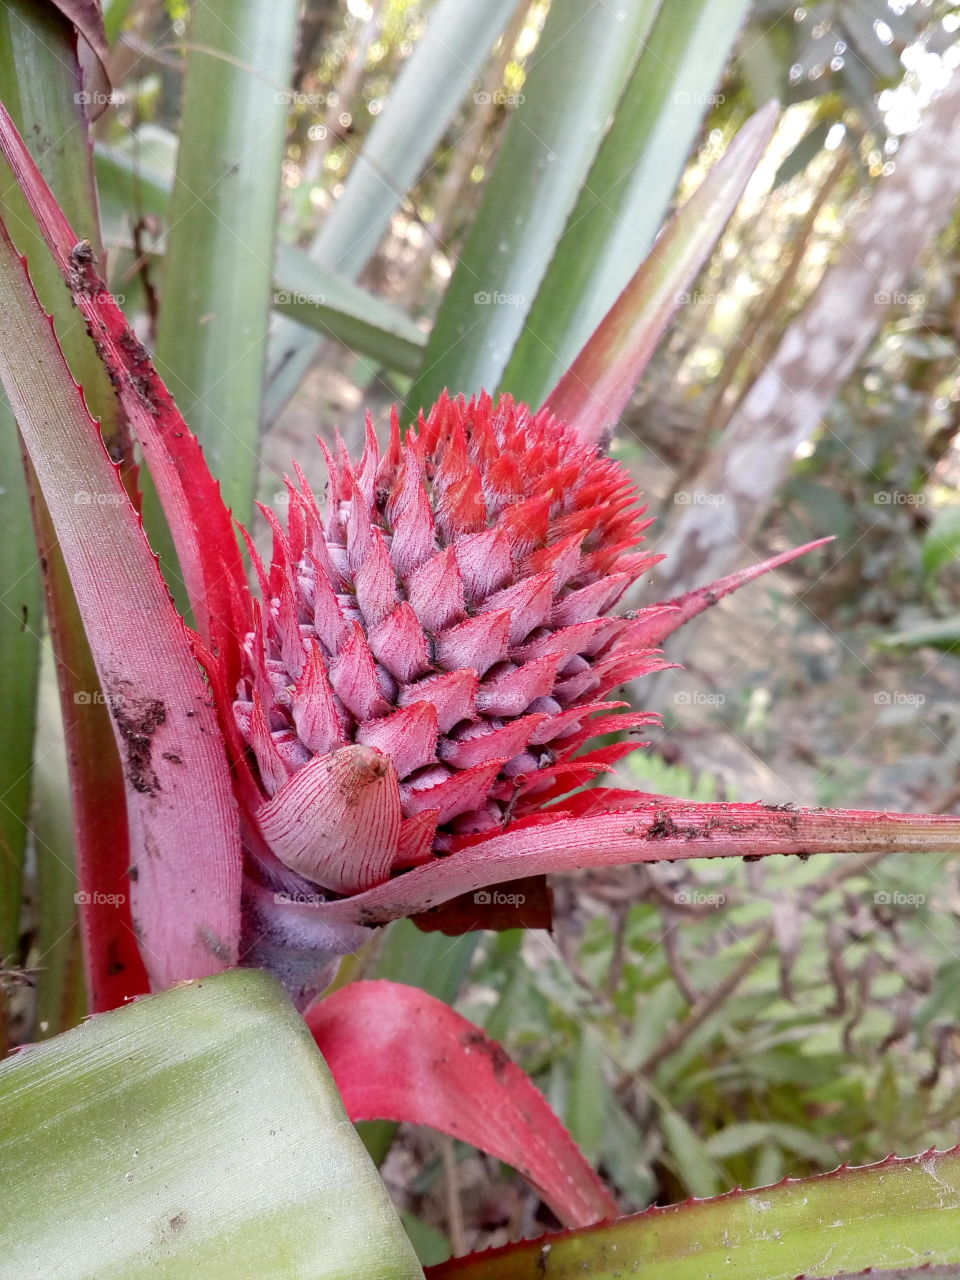 A nice pineapple. It's looks so beautiful!